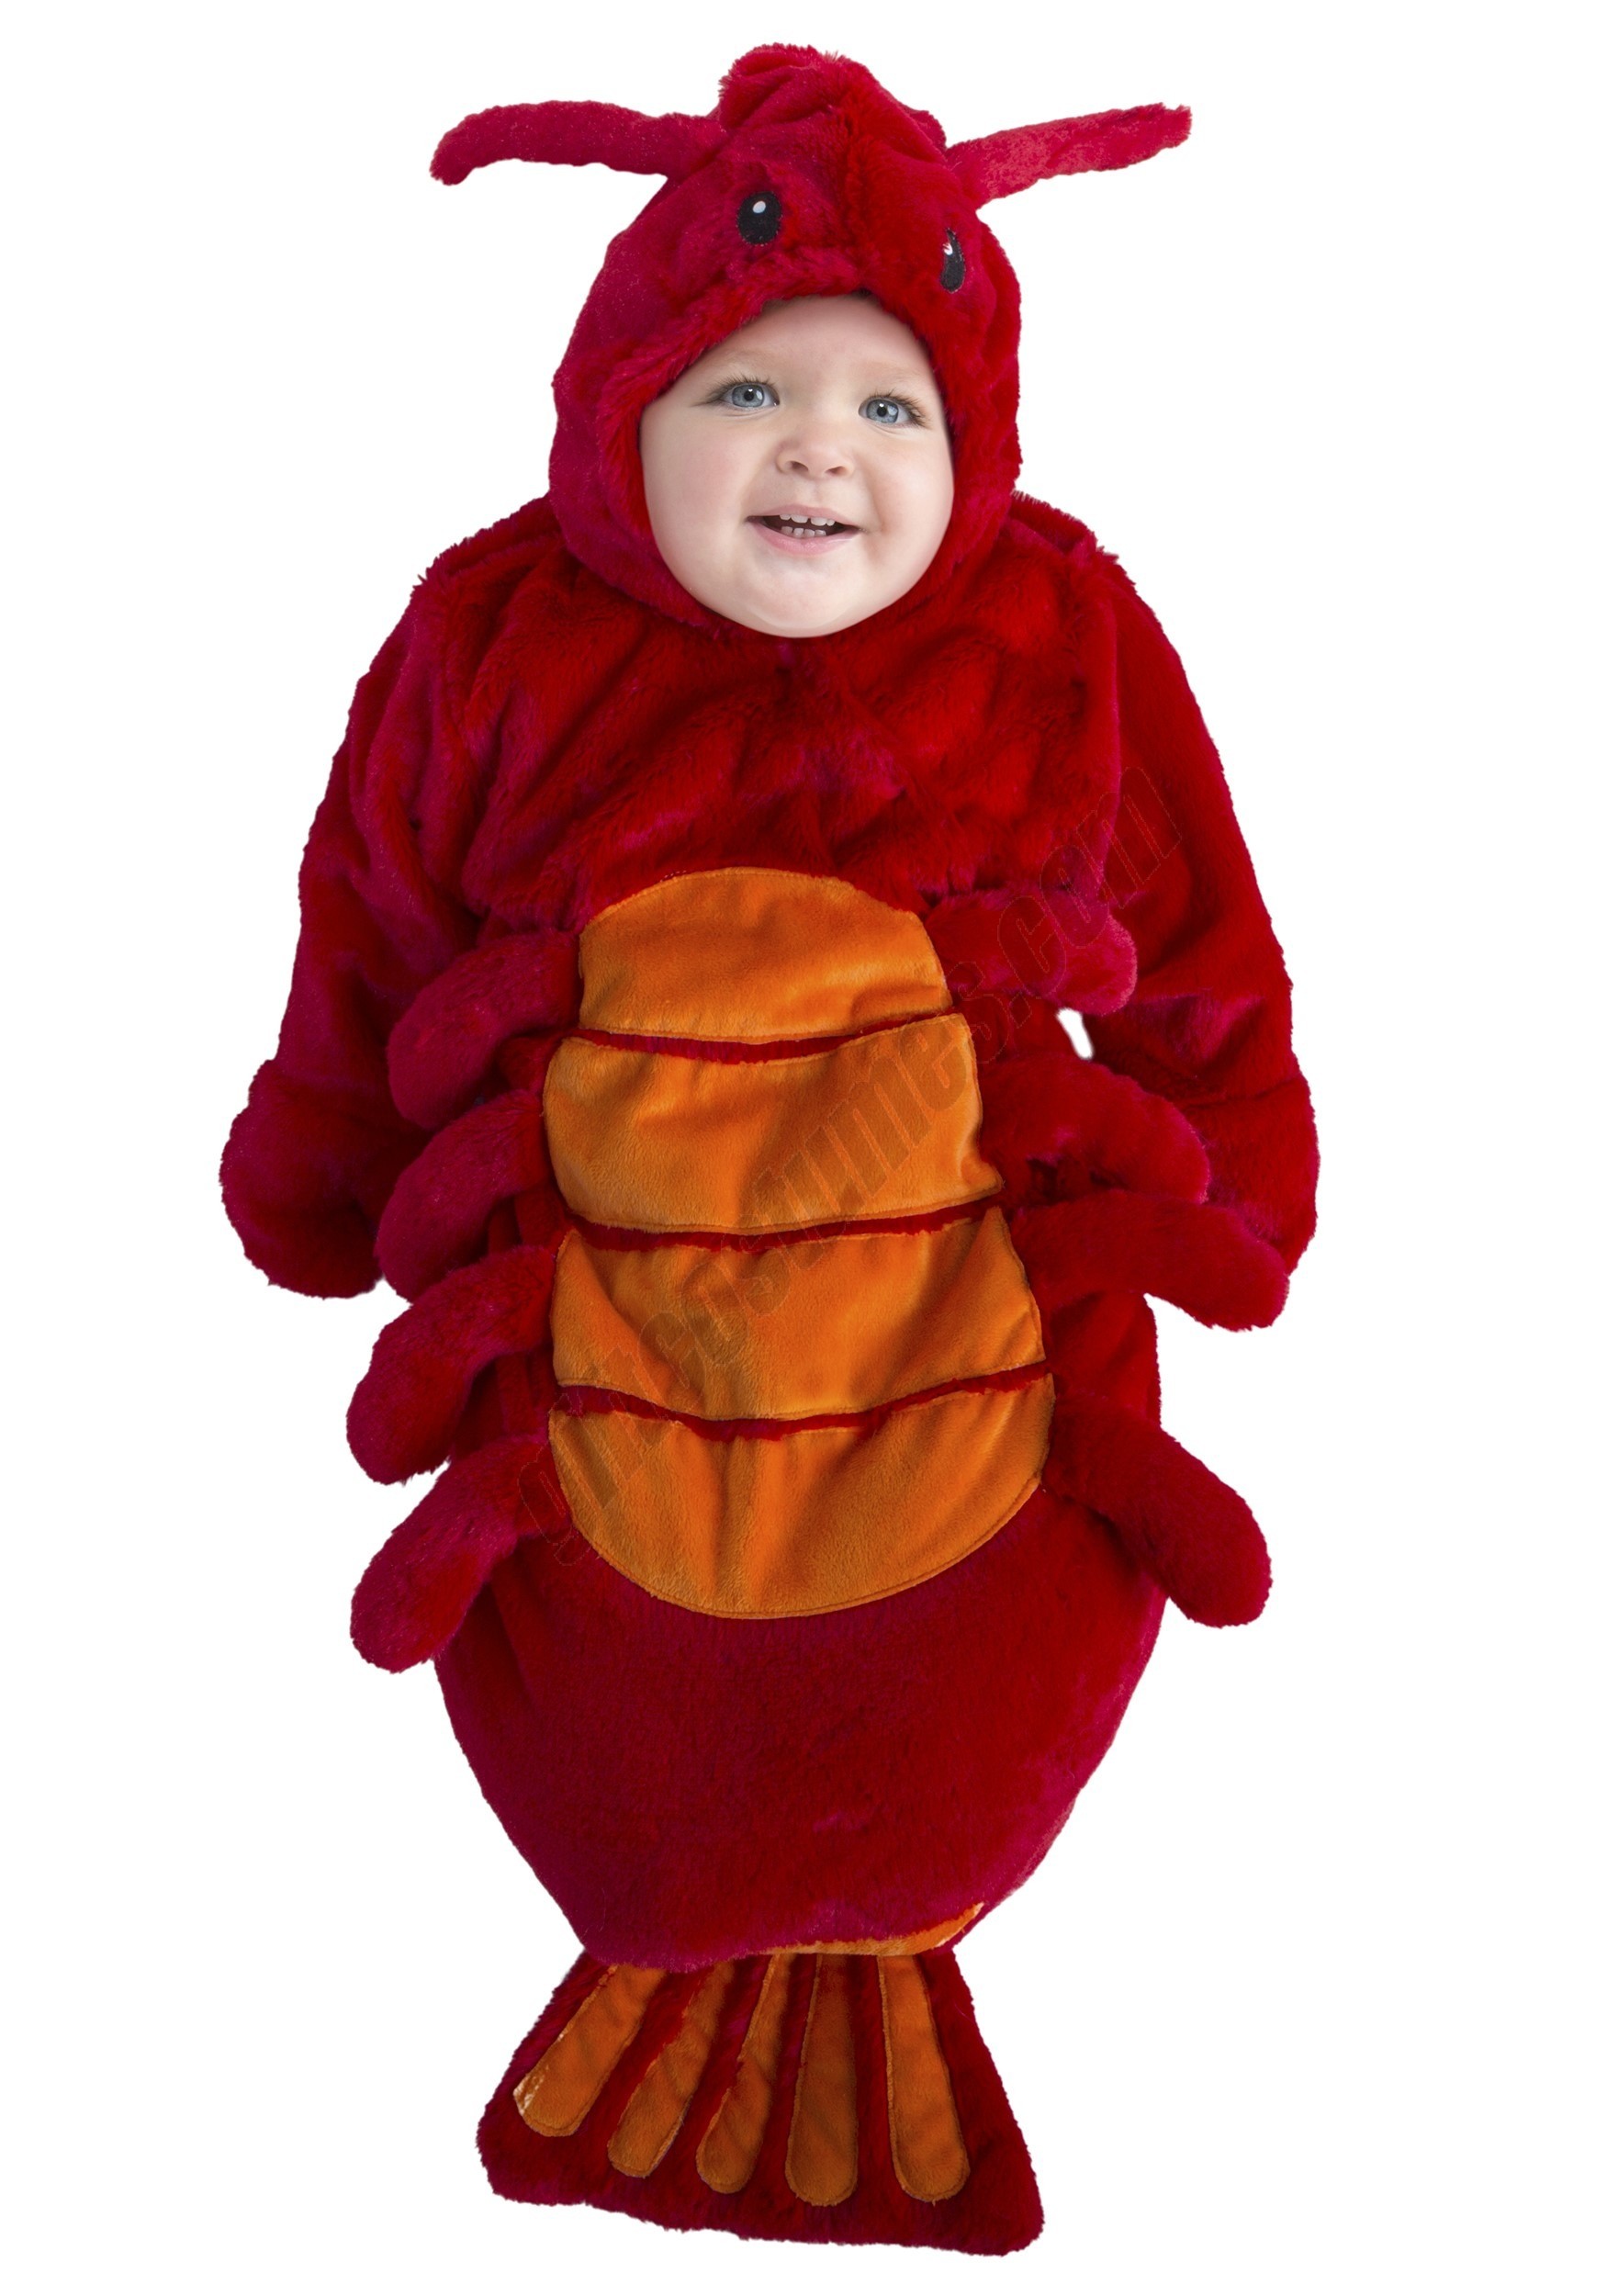 Infant Buntington Lucky Lobster Costume Promotions - Infant Buntington Lucky Lobster Costume Promotions